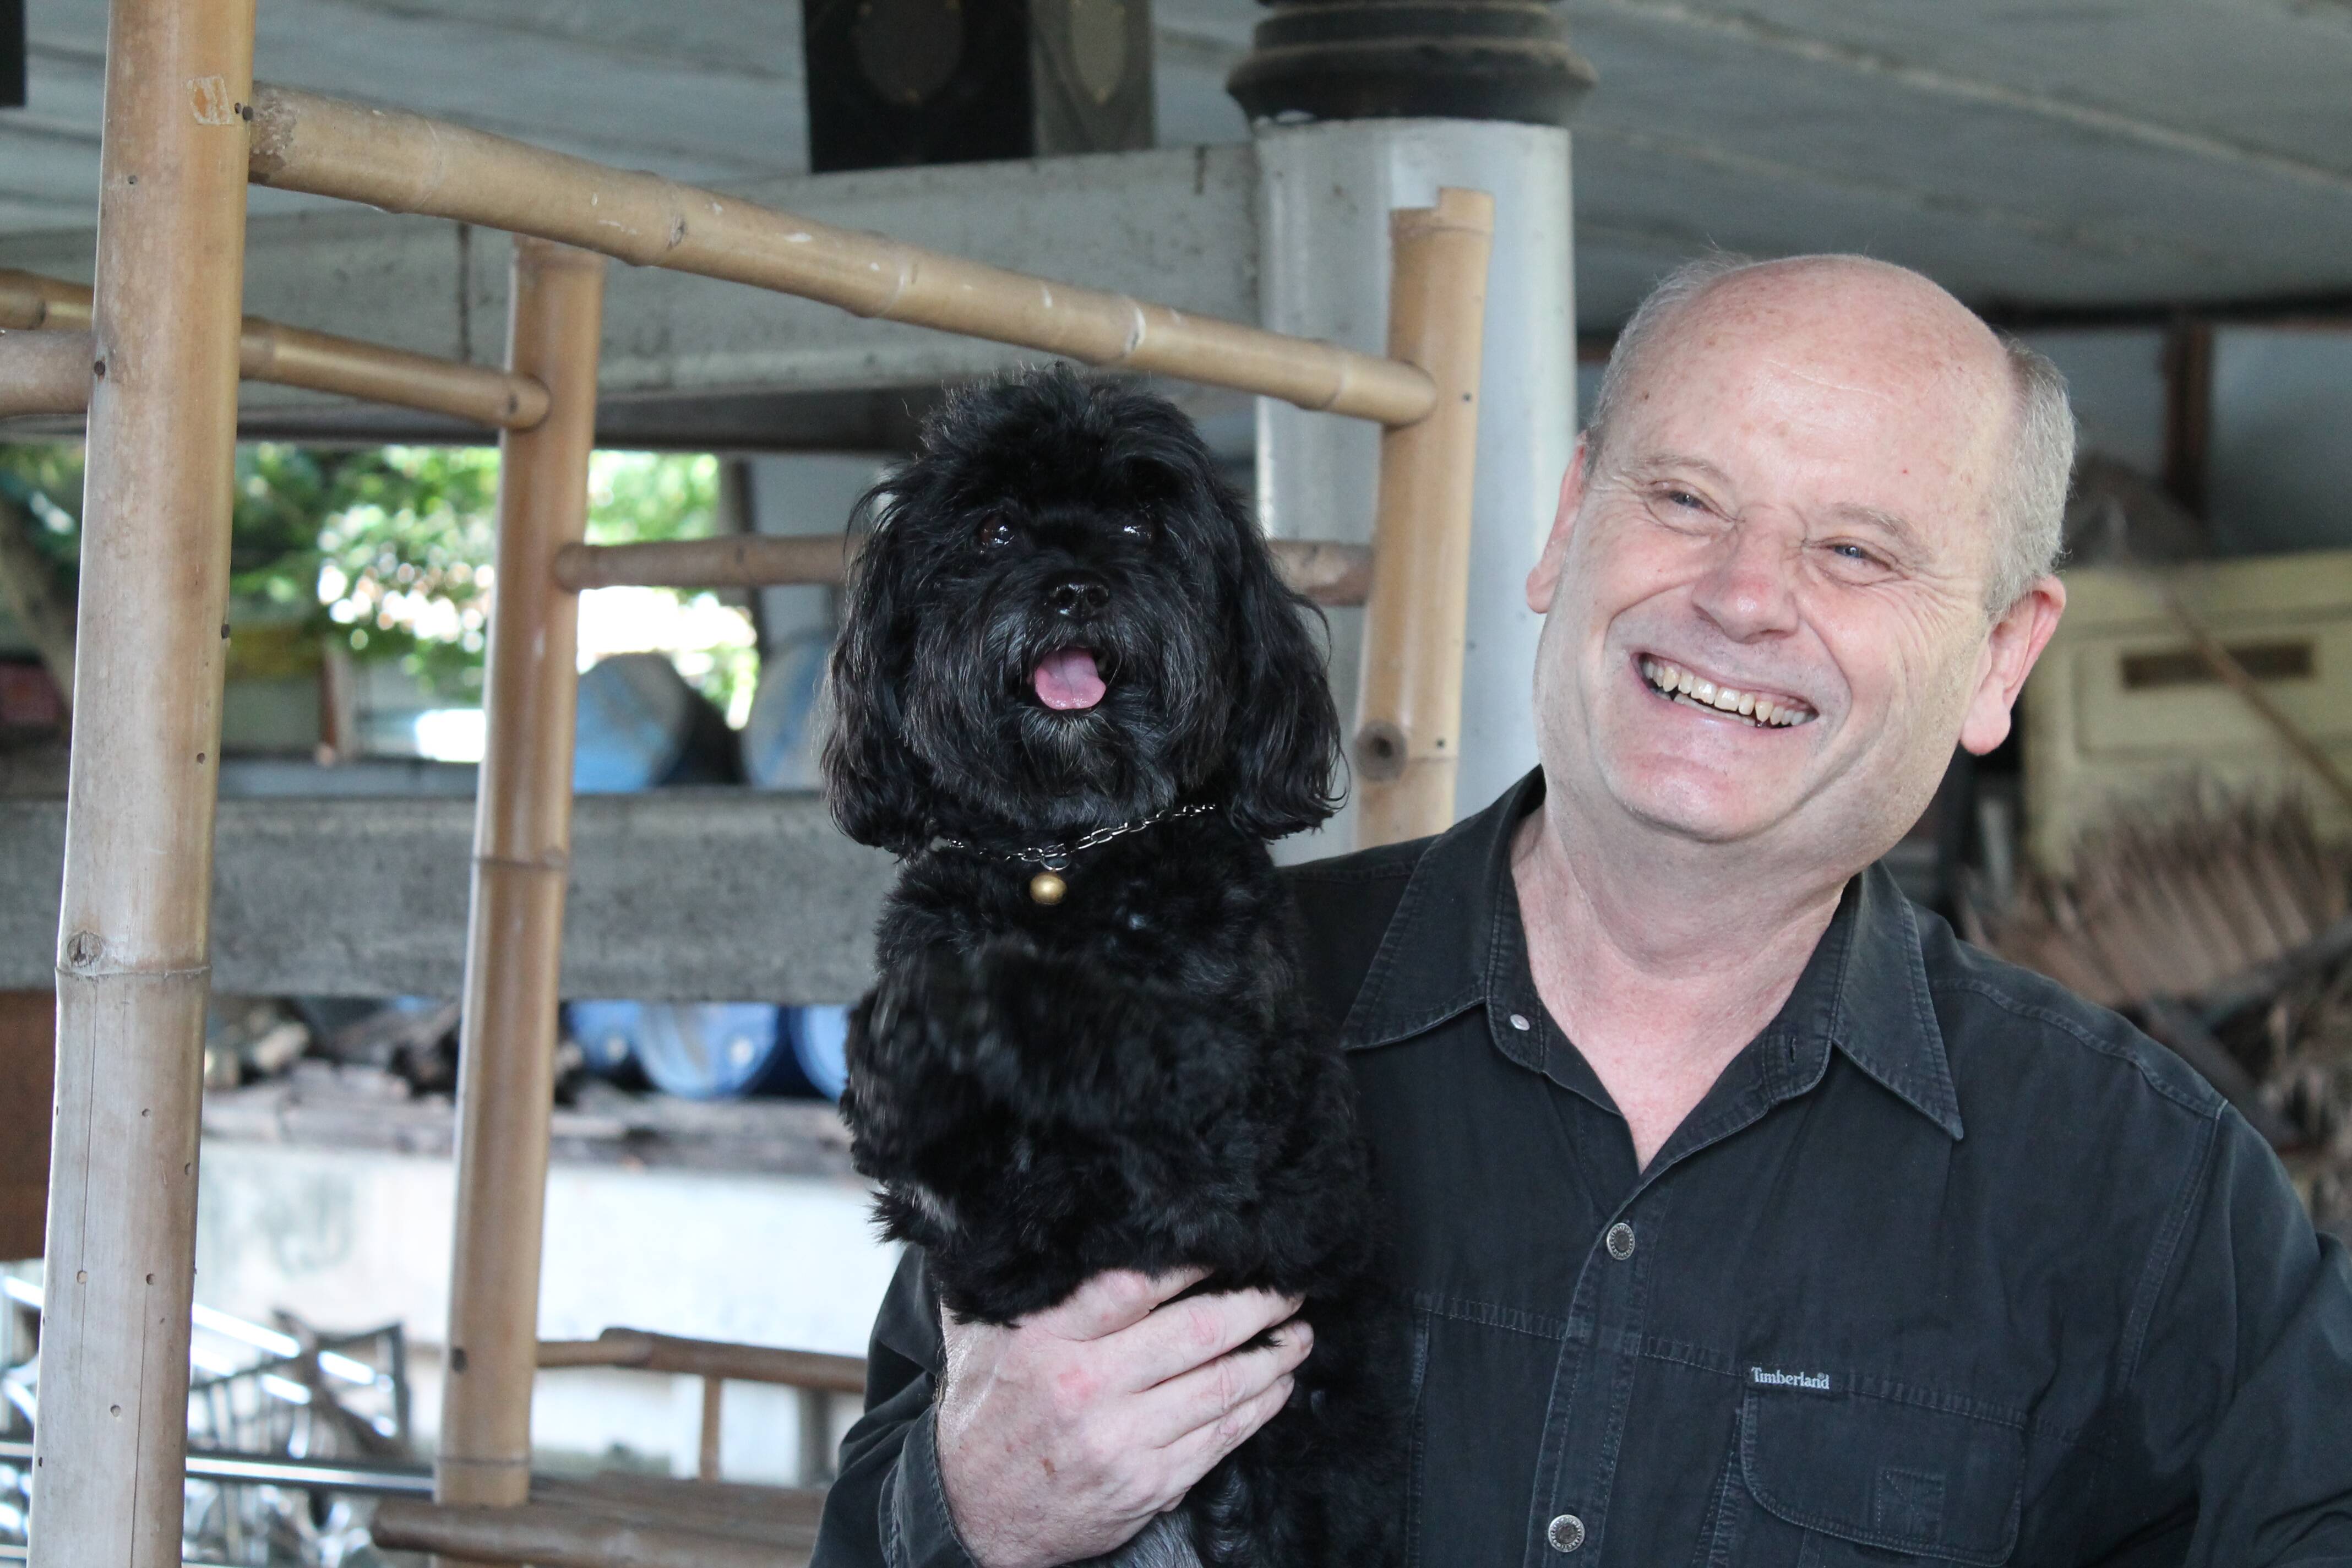 Jeff e Spinxs, o cachorro que faz o Wai - Taling Chan 